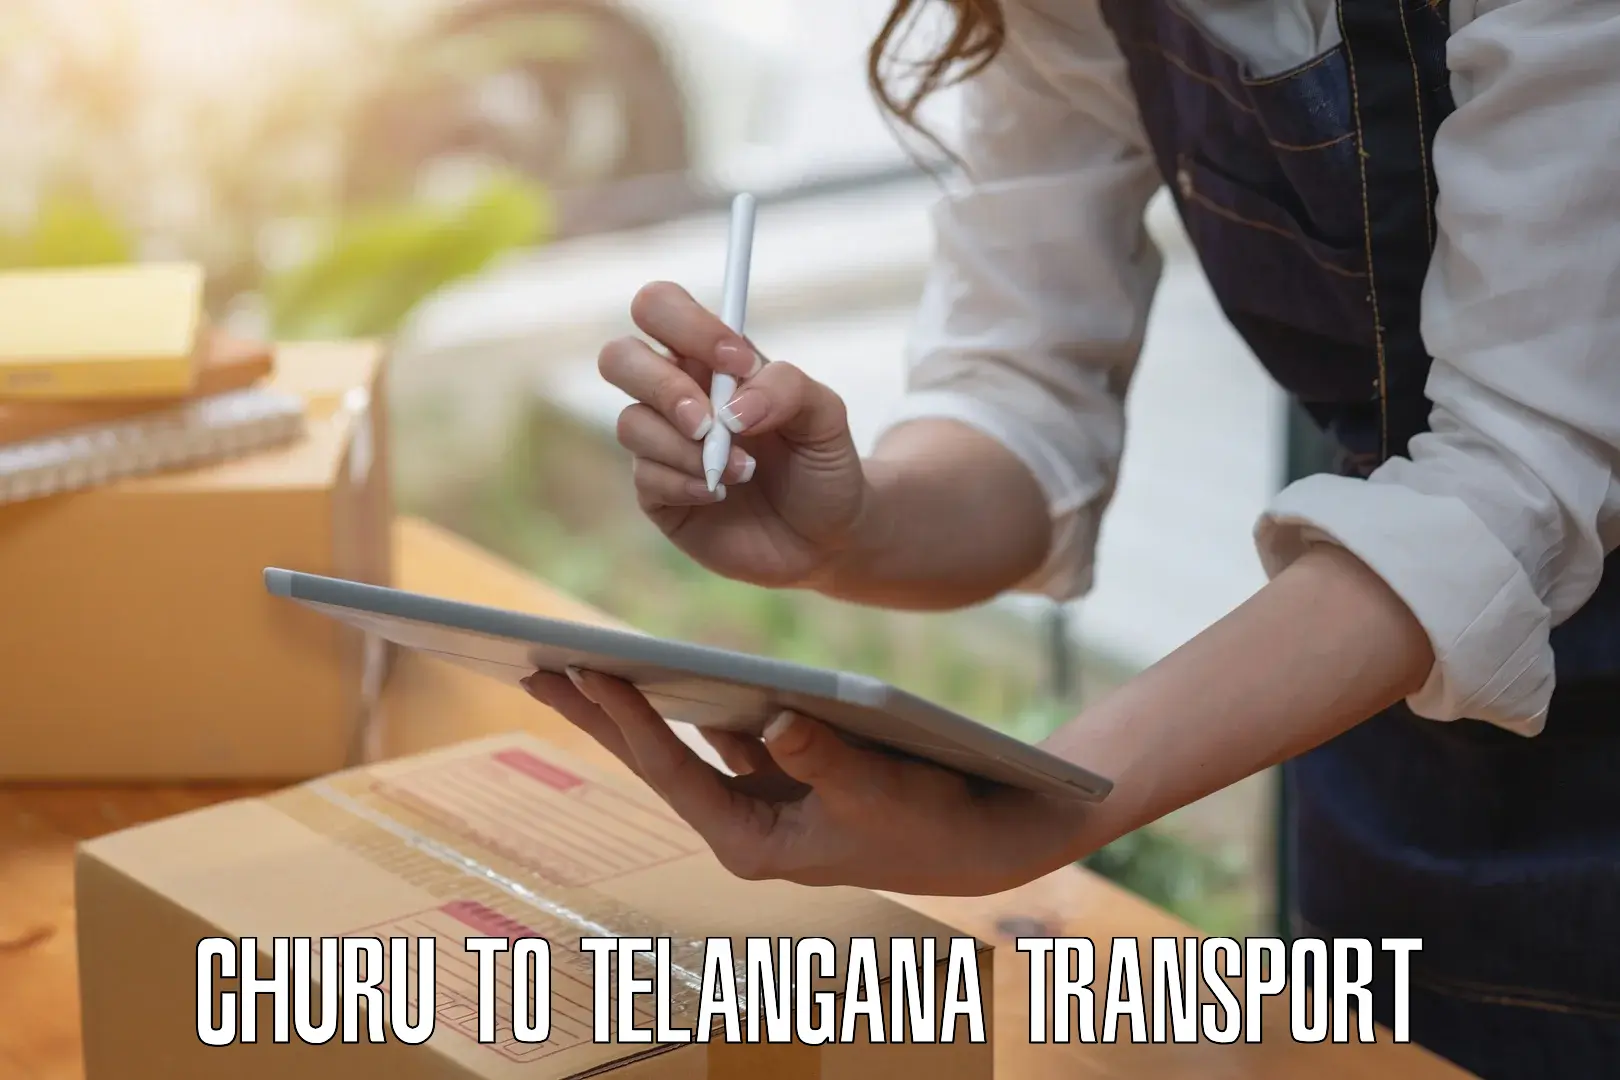 Transport bike from one state to another Churu to Telangana